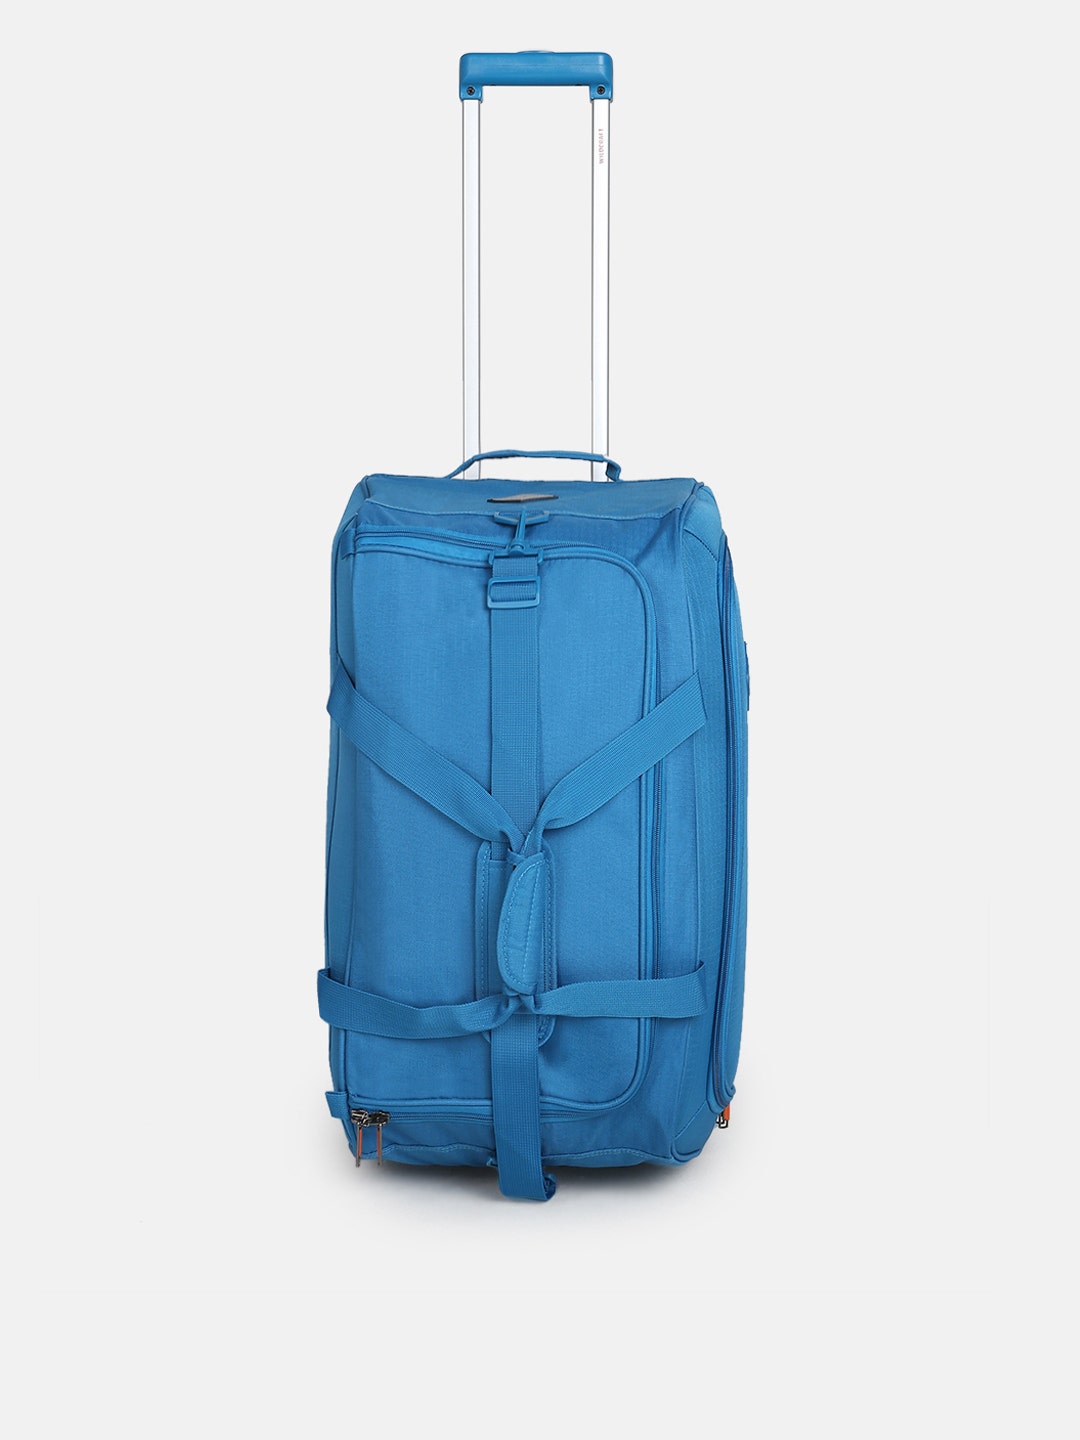 Wildcraft Proxima Trolley Duffle Bag (12215)